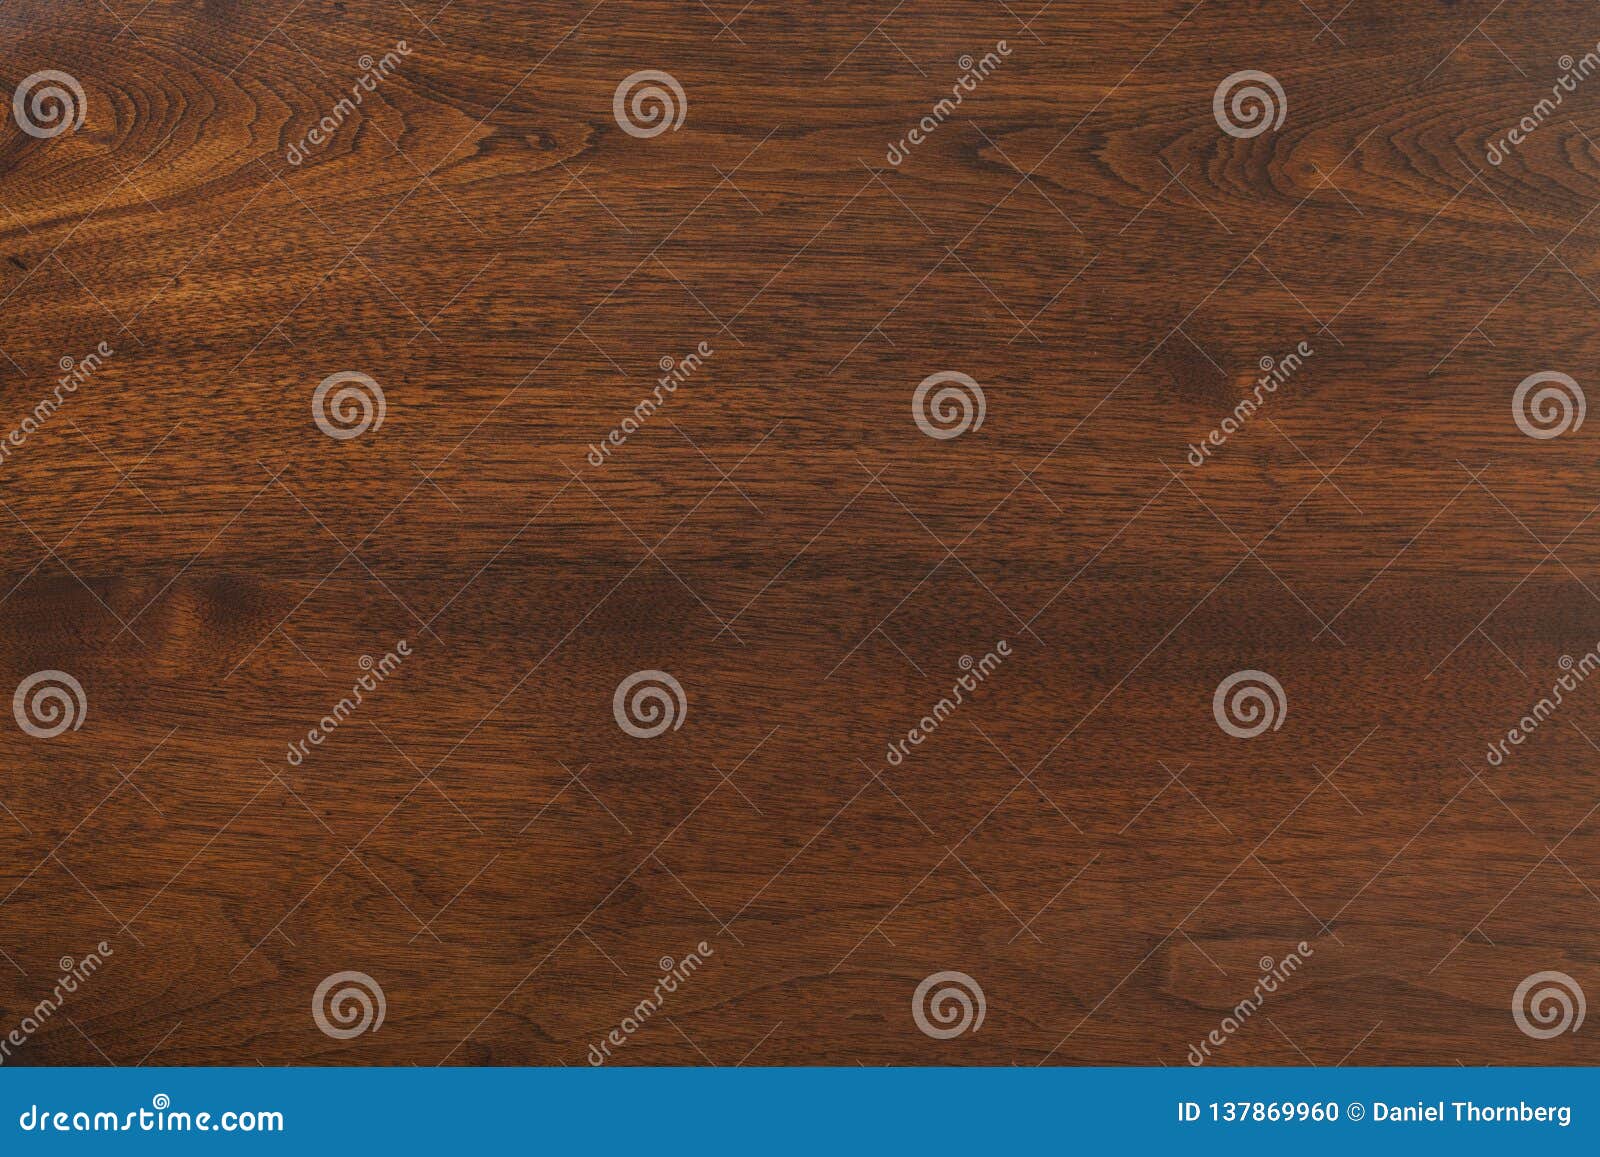 beautiful walnut wood texture background